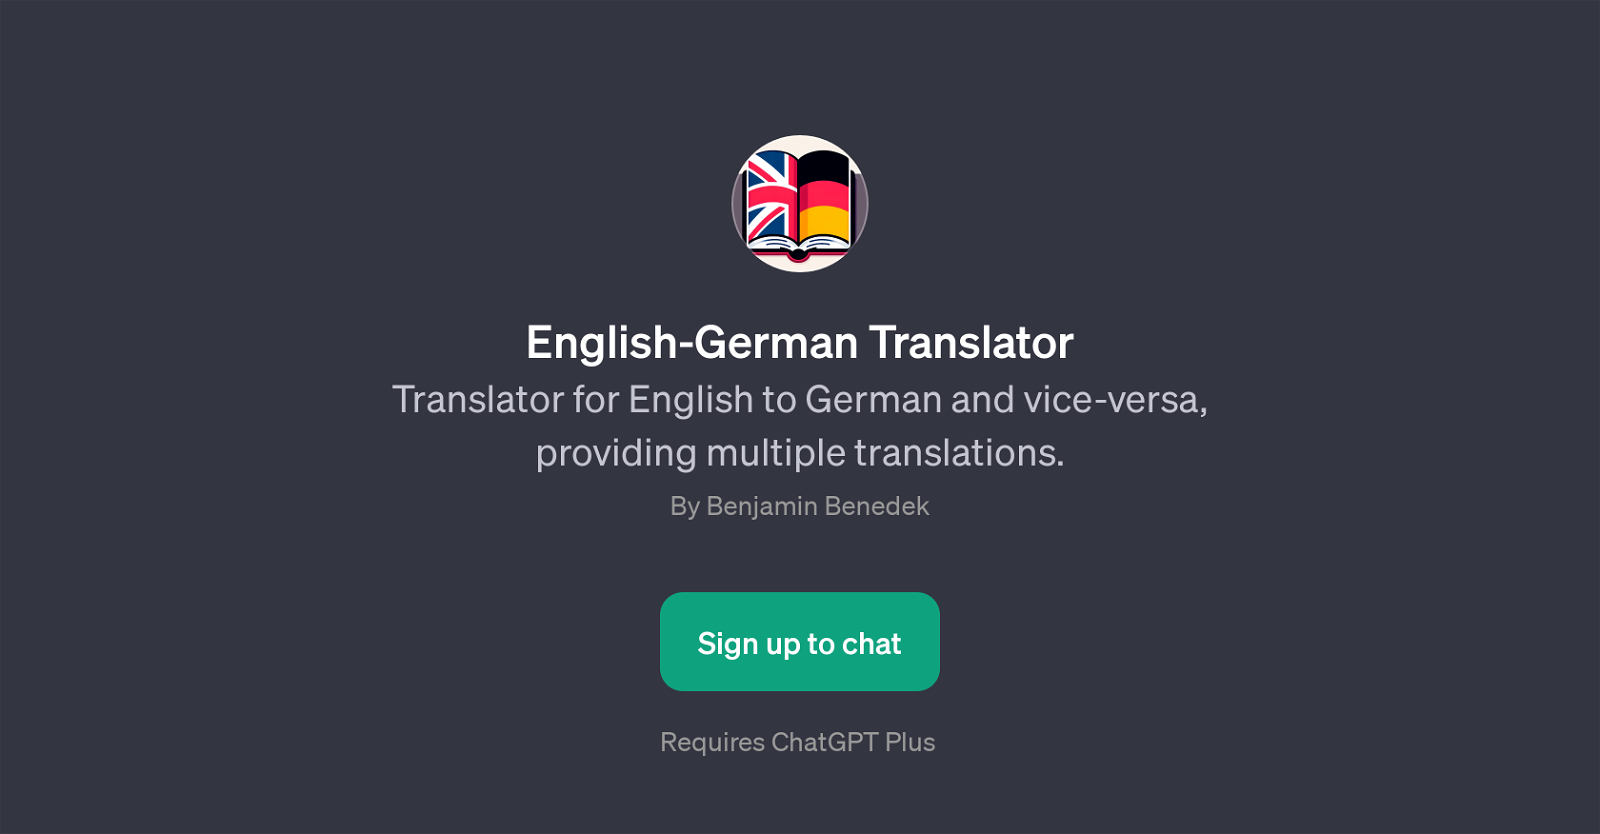 English-German Translator website